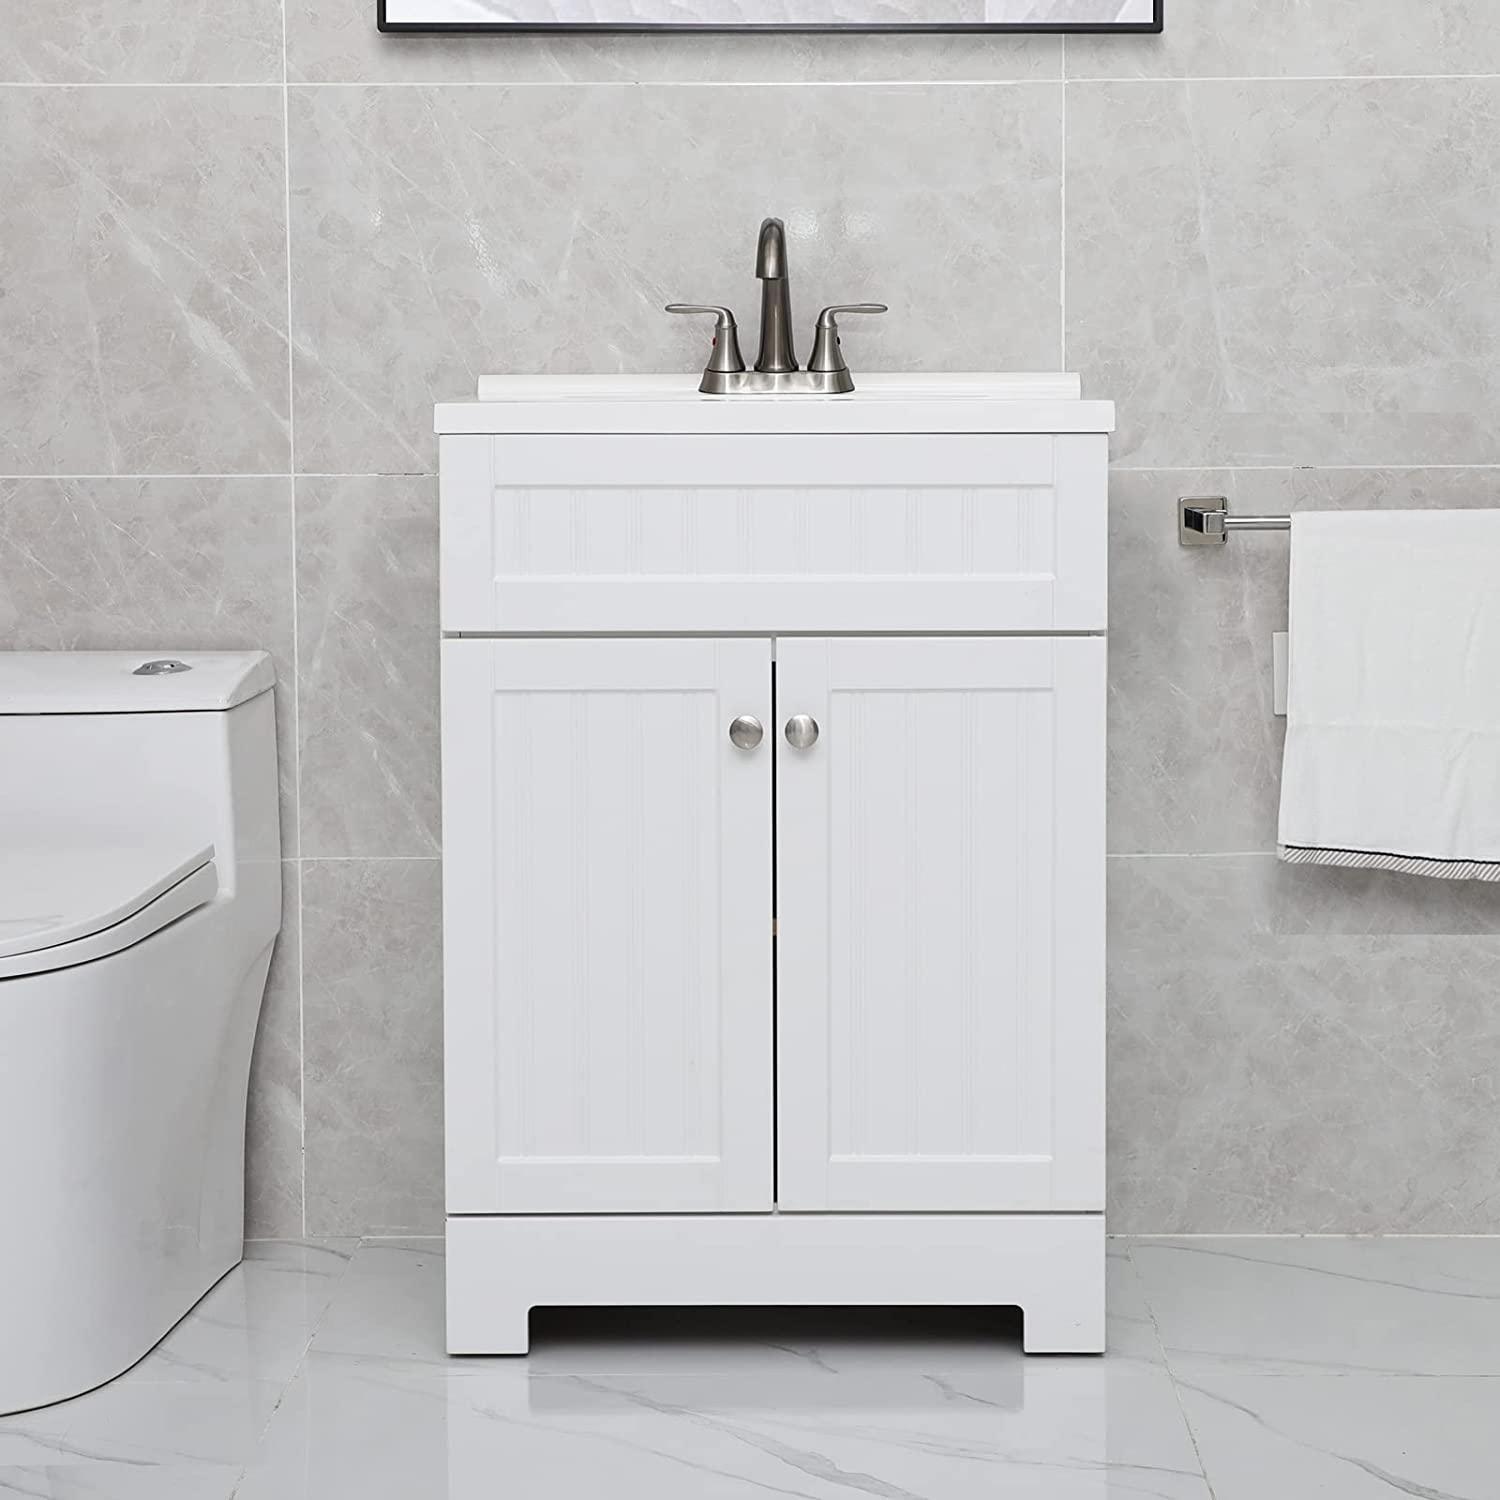 Short Pedestal Sink Washroom Storage Furniture w/Double Doors and